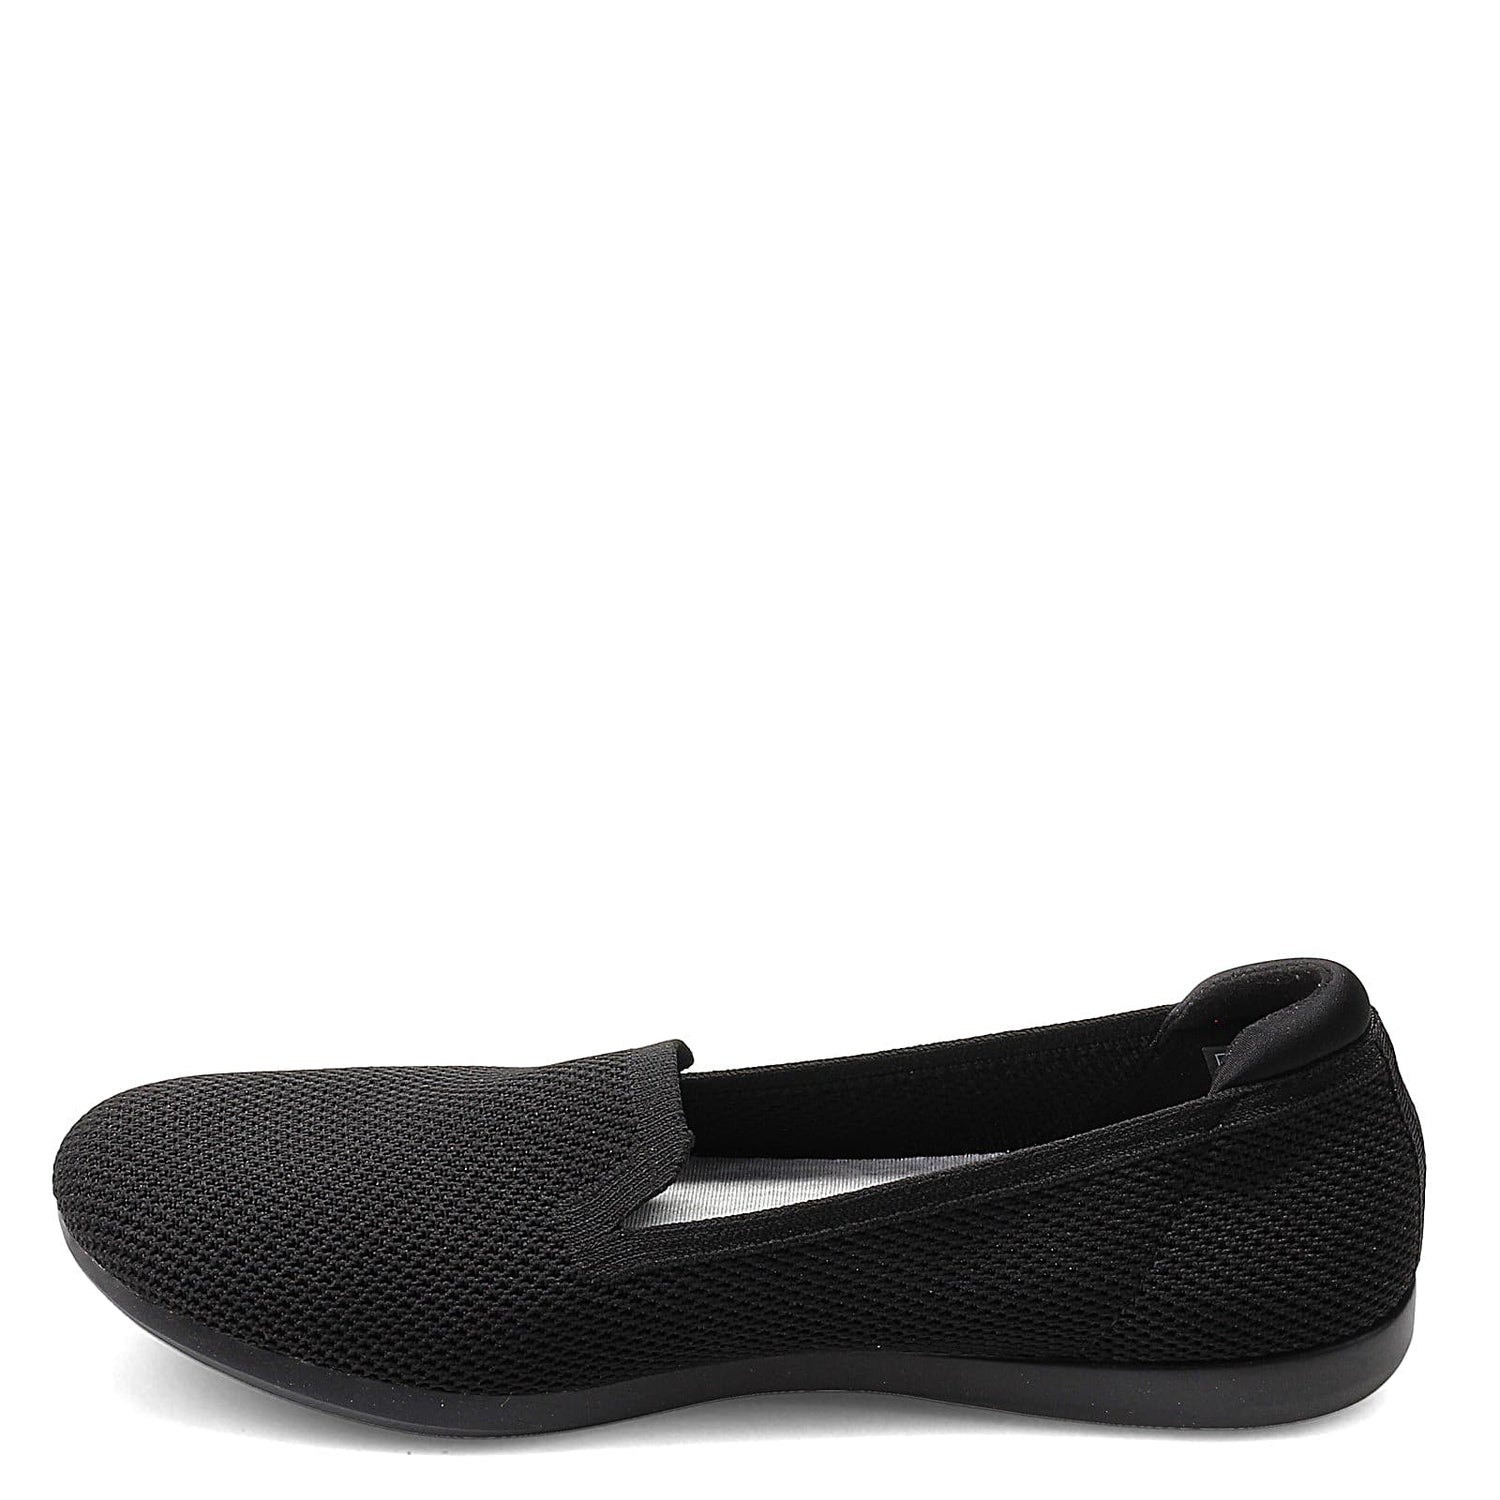 Peltz Shoes  Women's Clarks Carly Dream Loafer